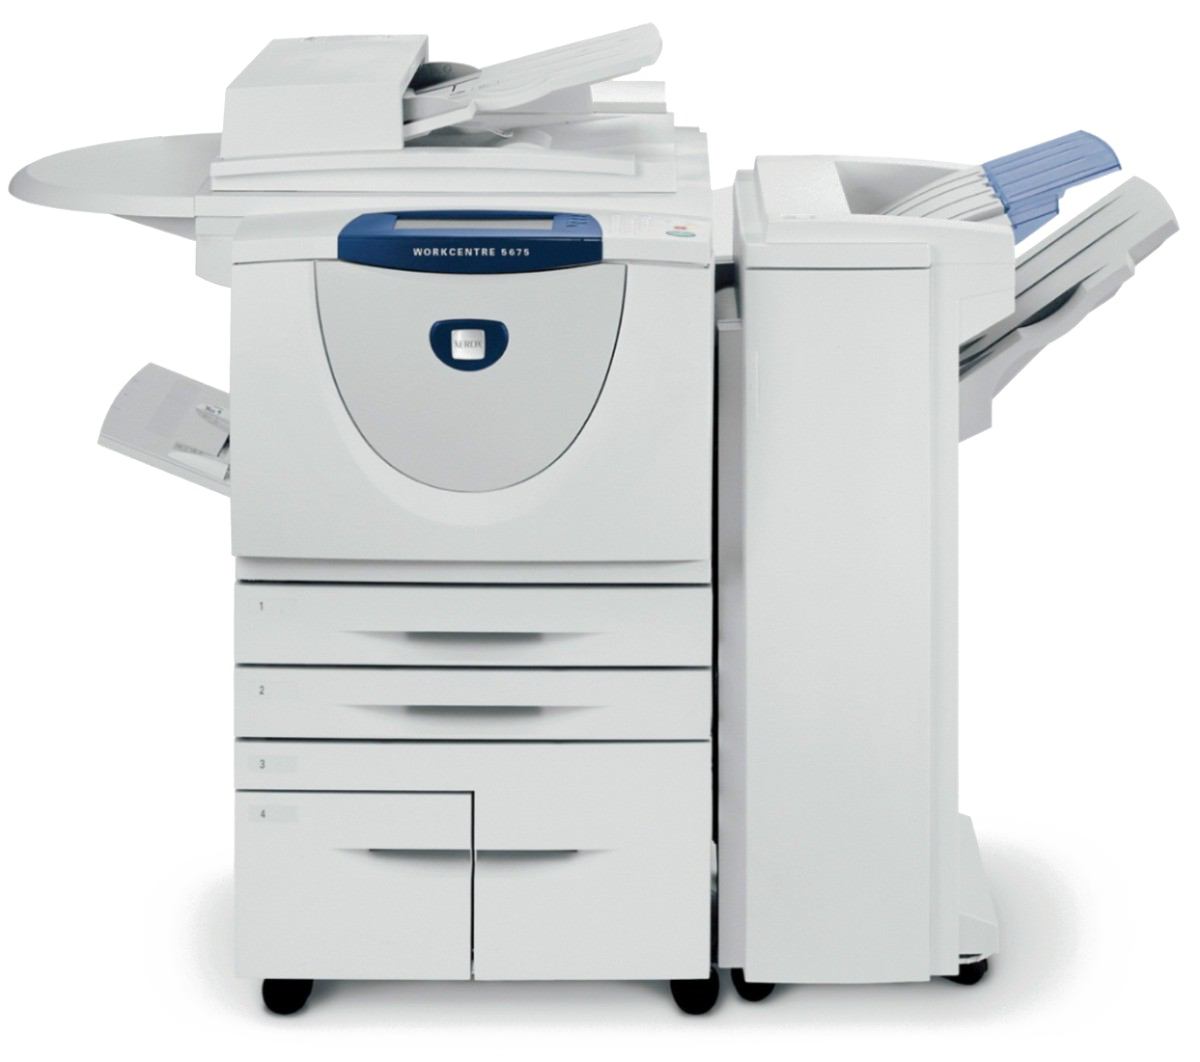 Xerox Machine PNG File HD PNG Image